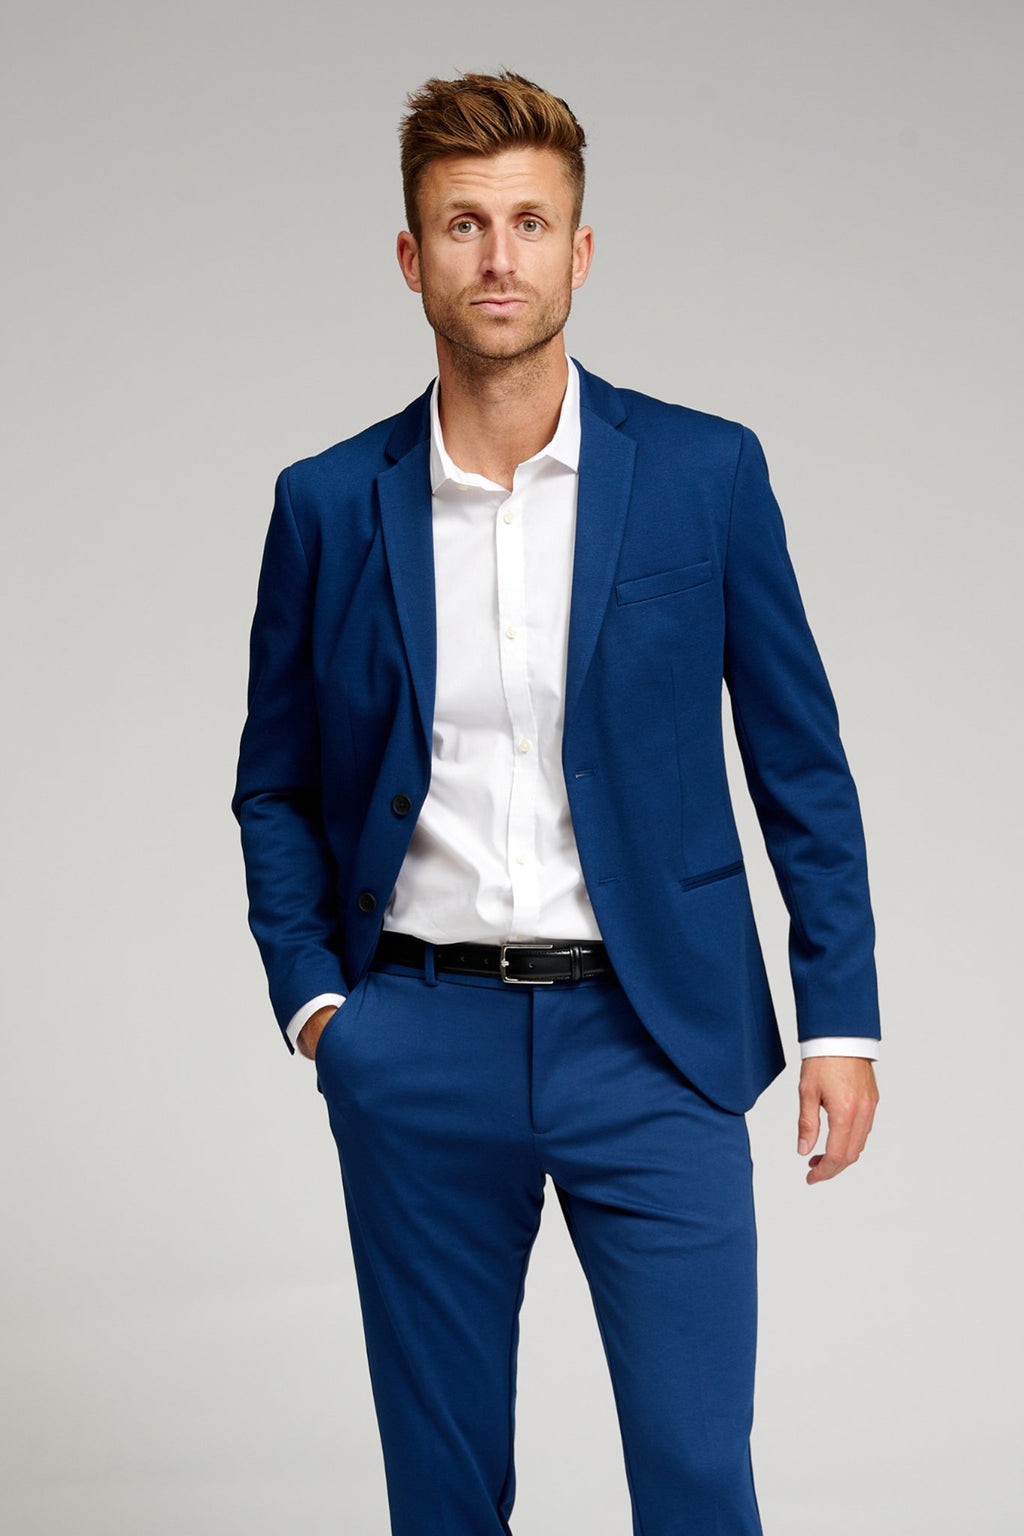 Performance Suit ™ ️ (modrá) + Performance Tričko - obchod s balíkom